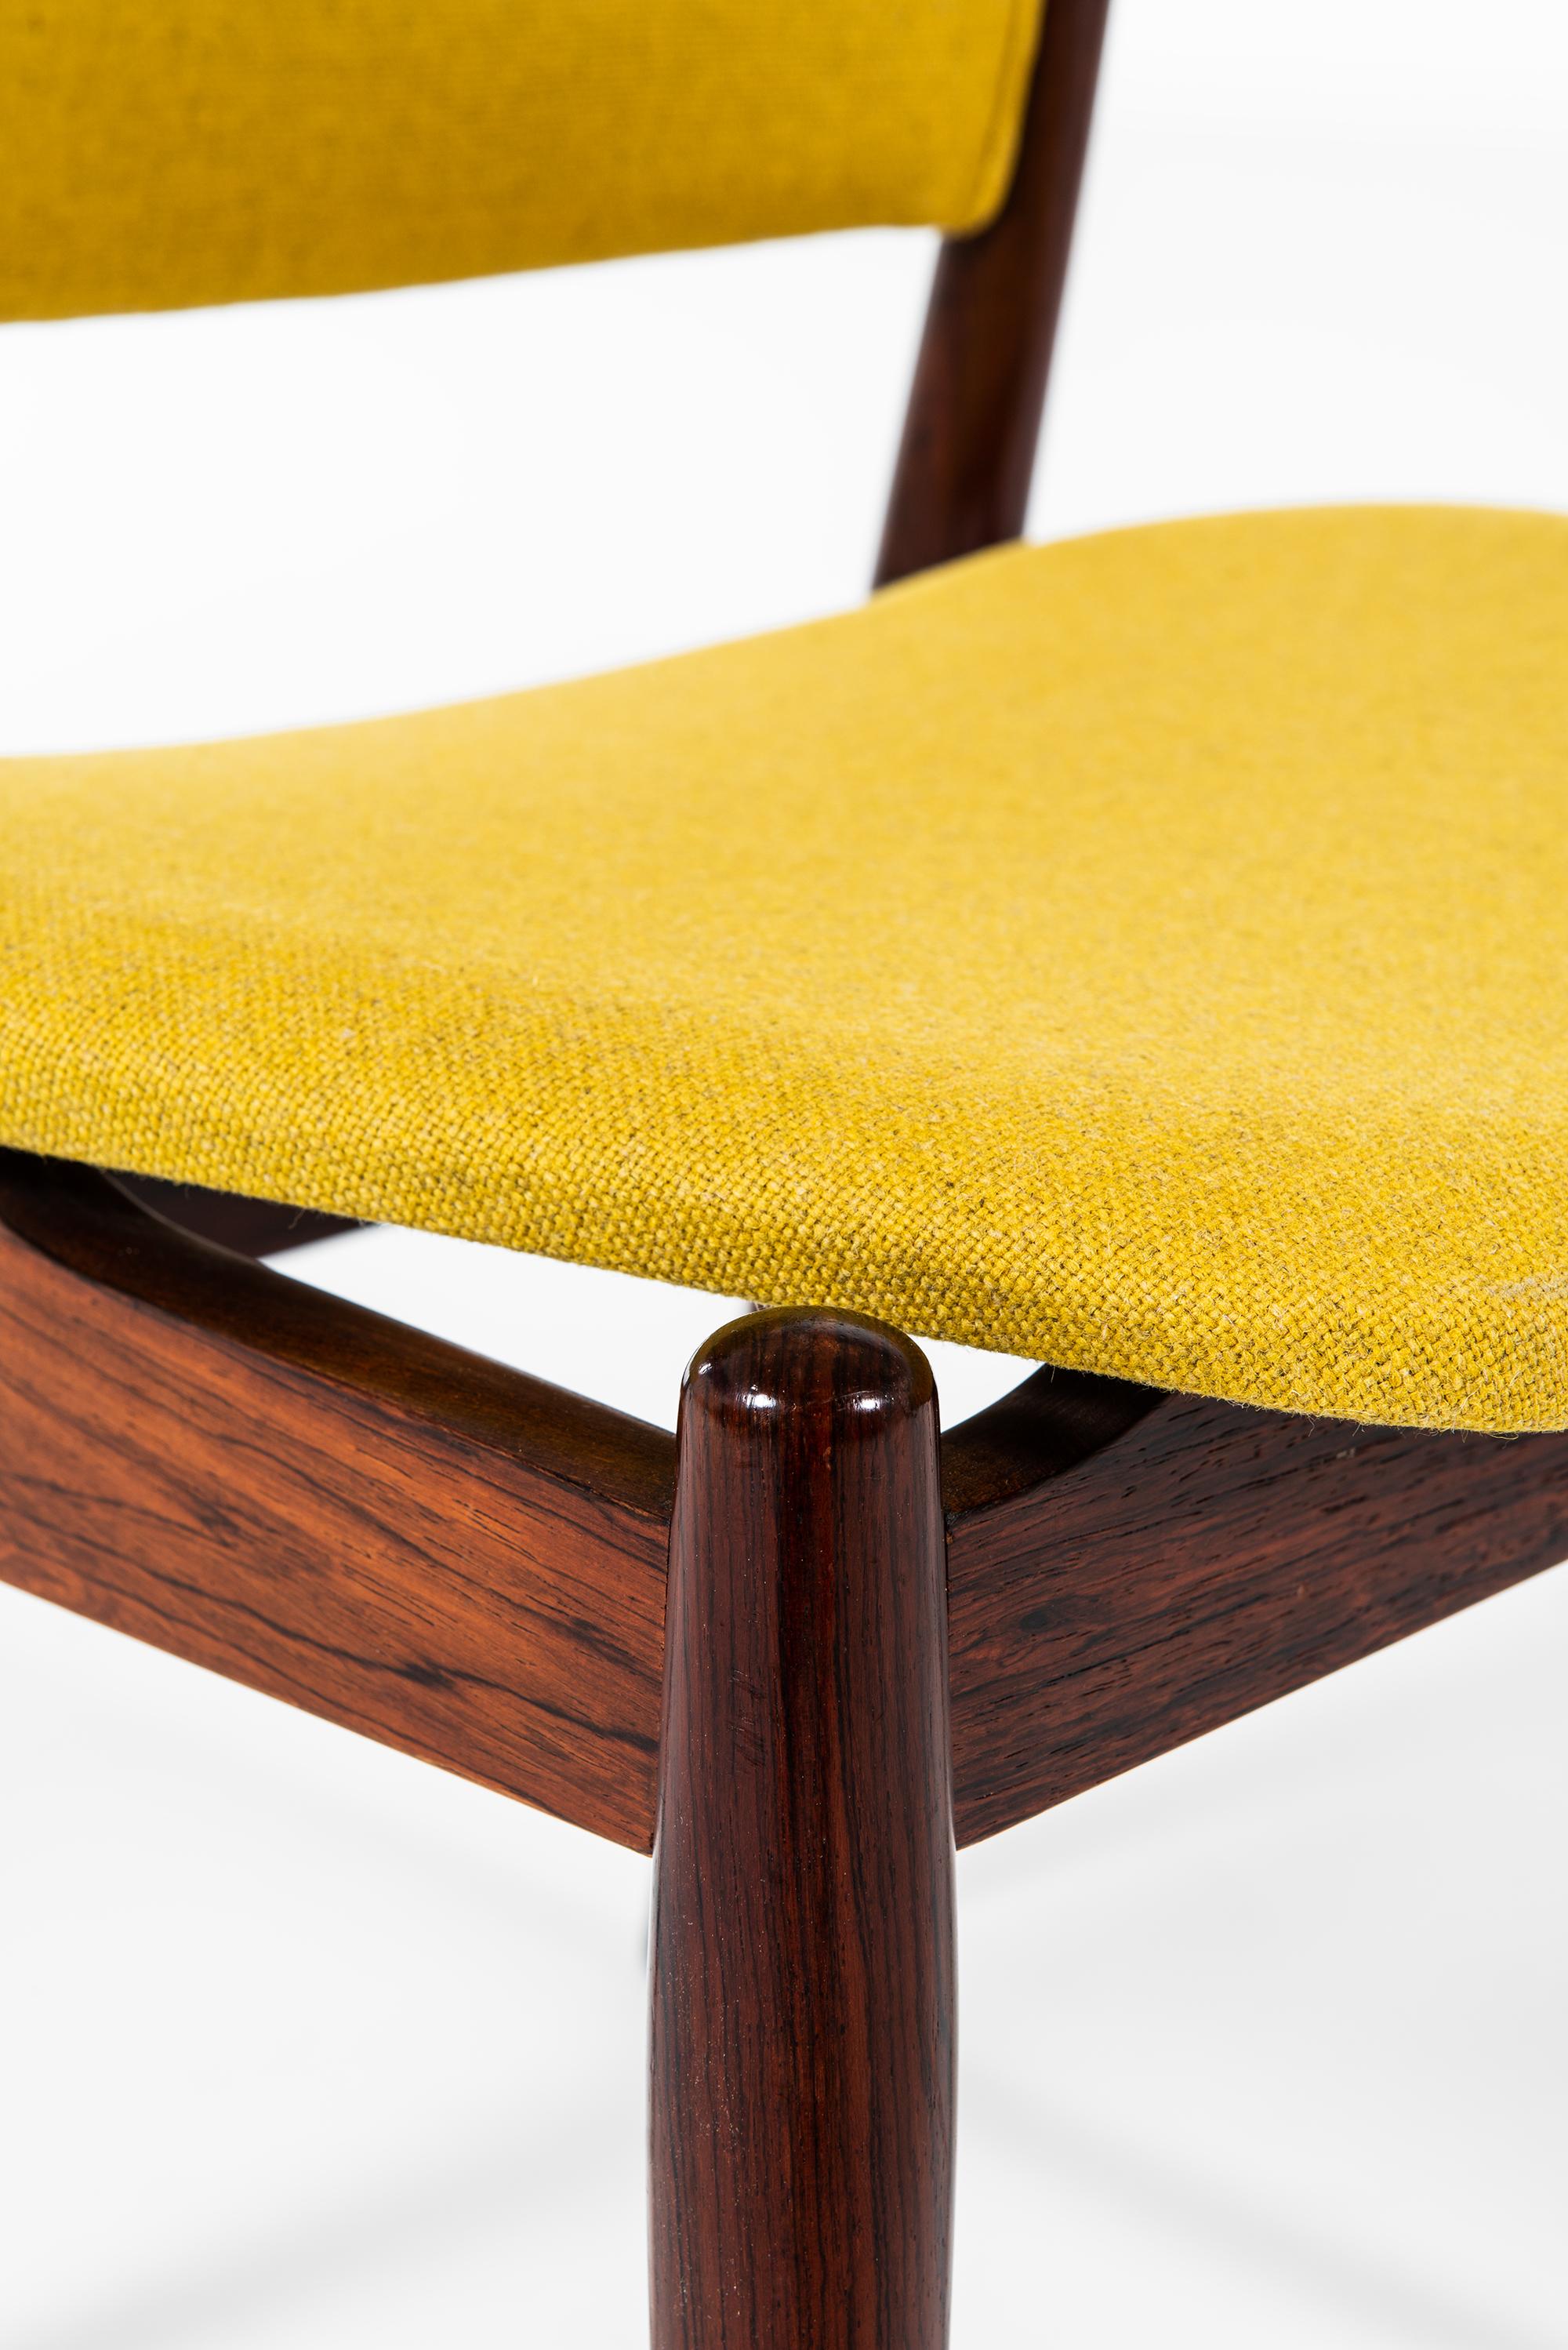 Fabric Arne Vodder Dining Chairs Model 462 by Sibast Møbelfabrik in Denmark